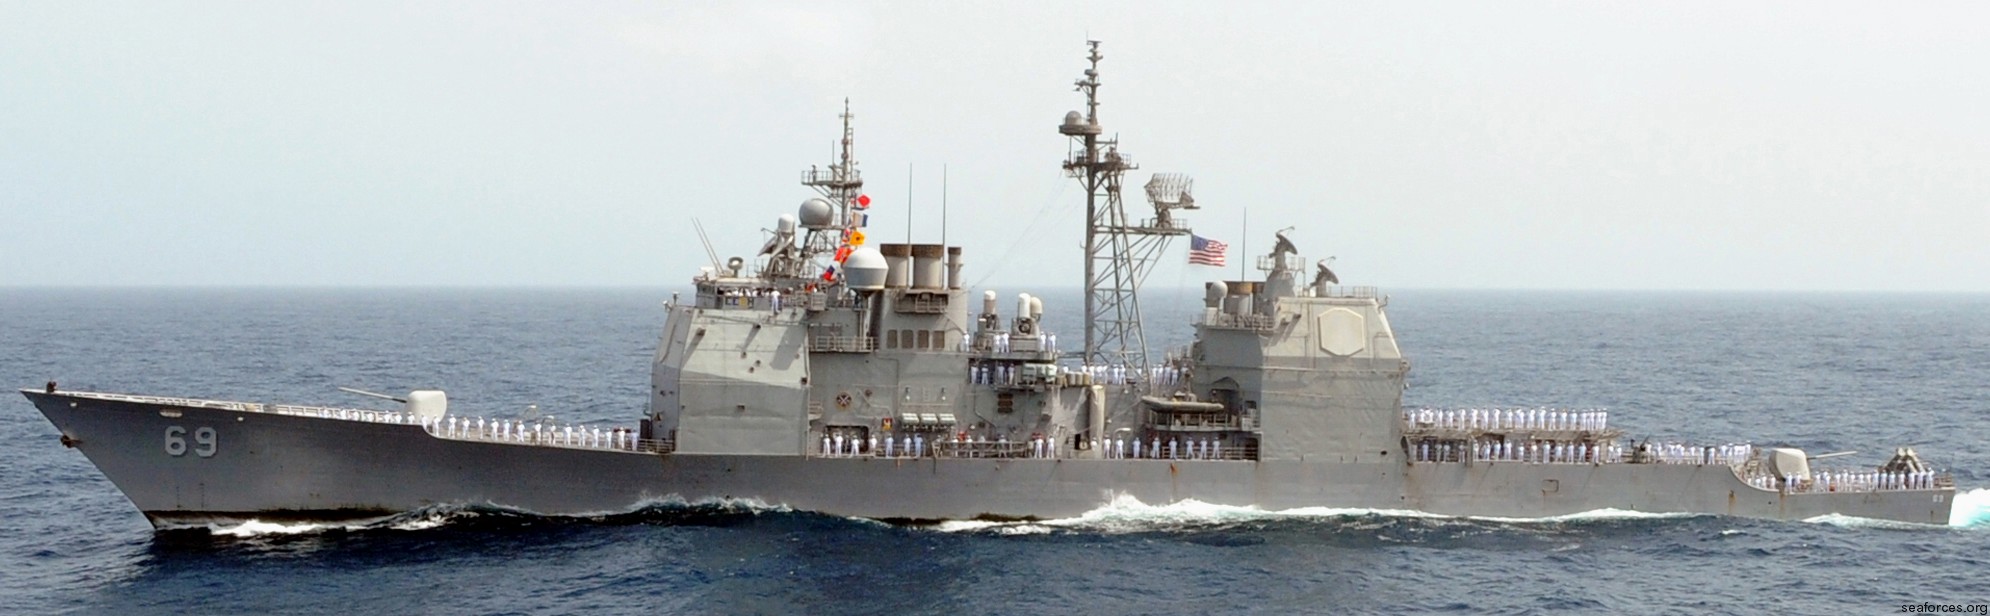 cg-69 uss vicksburg ticonderoga class guided missile cruiser us navy 29 arabian sea